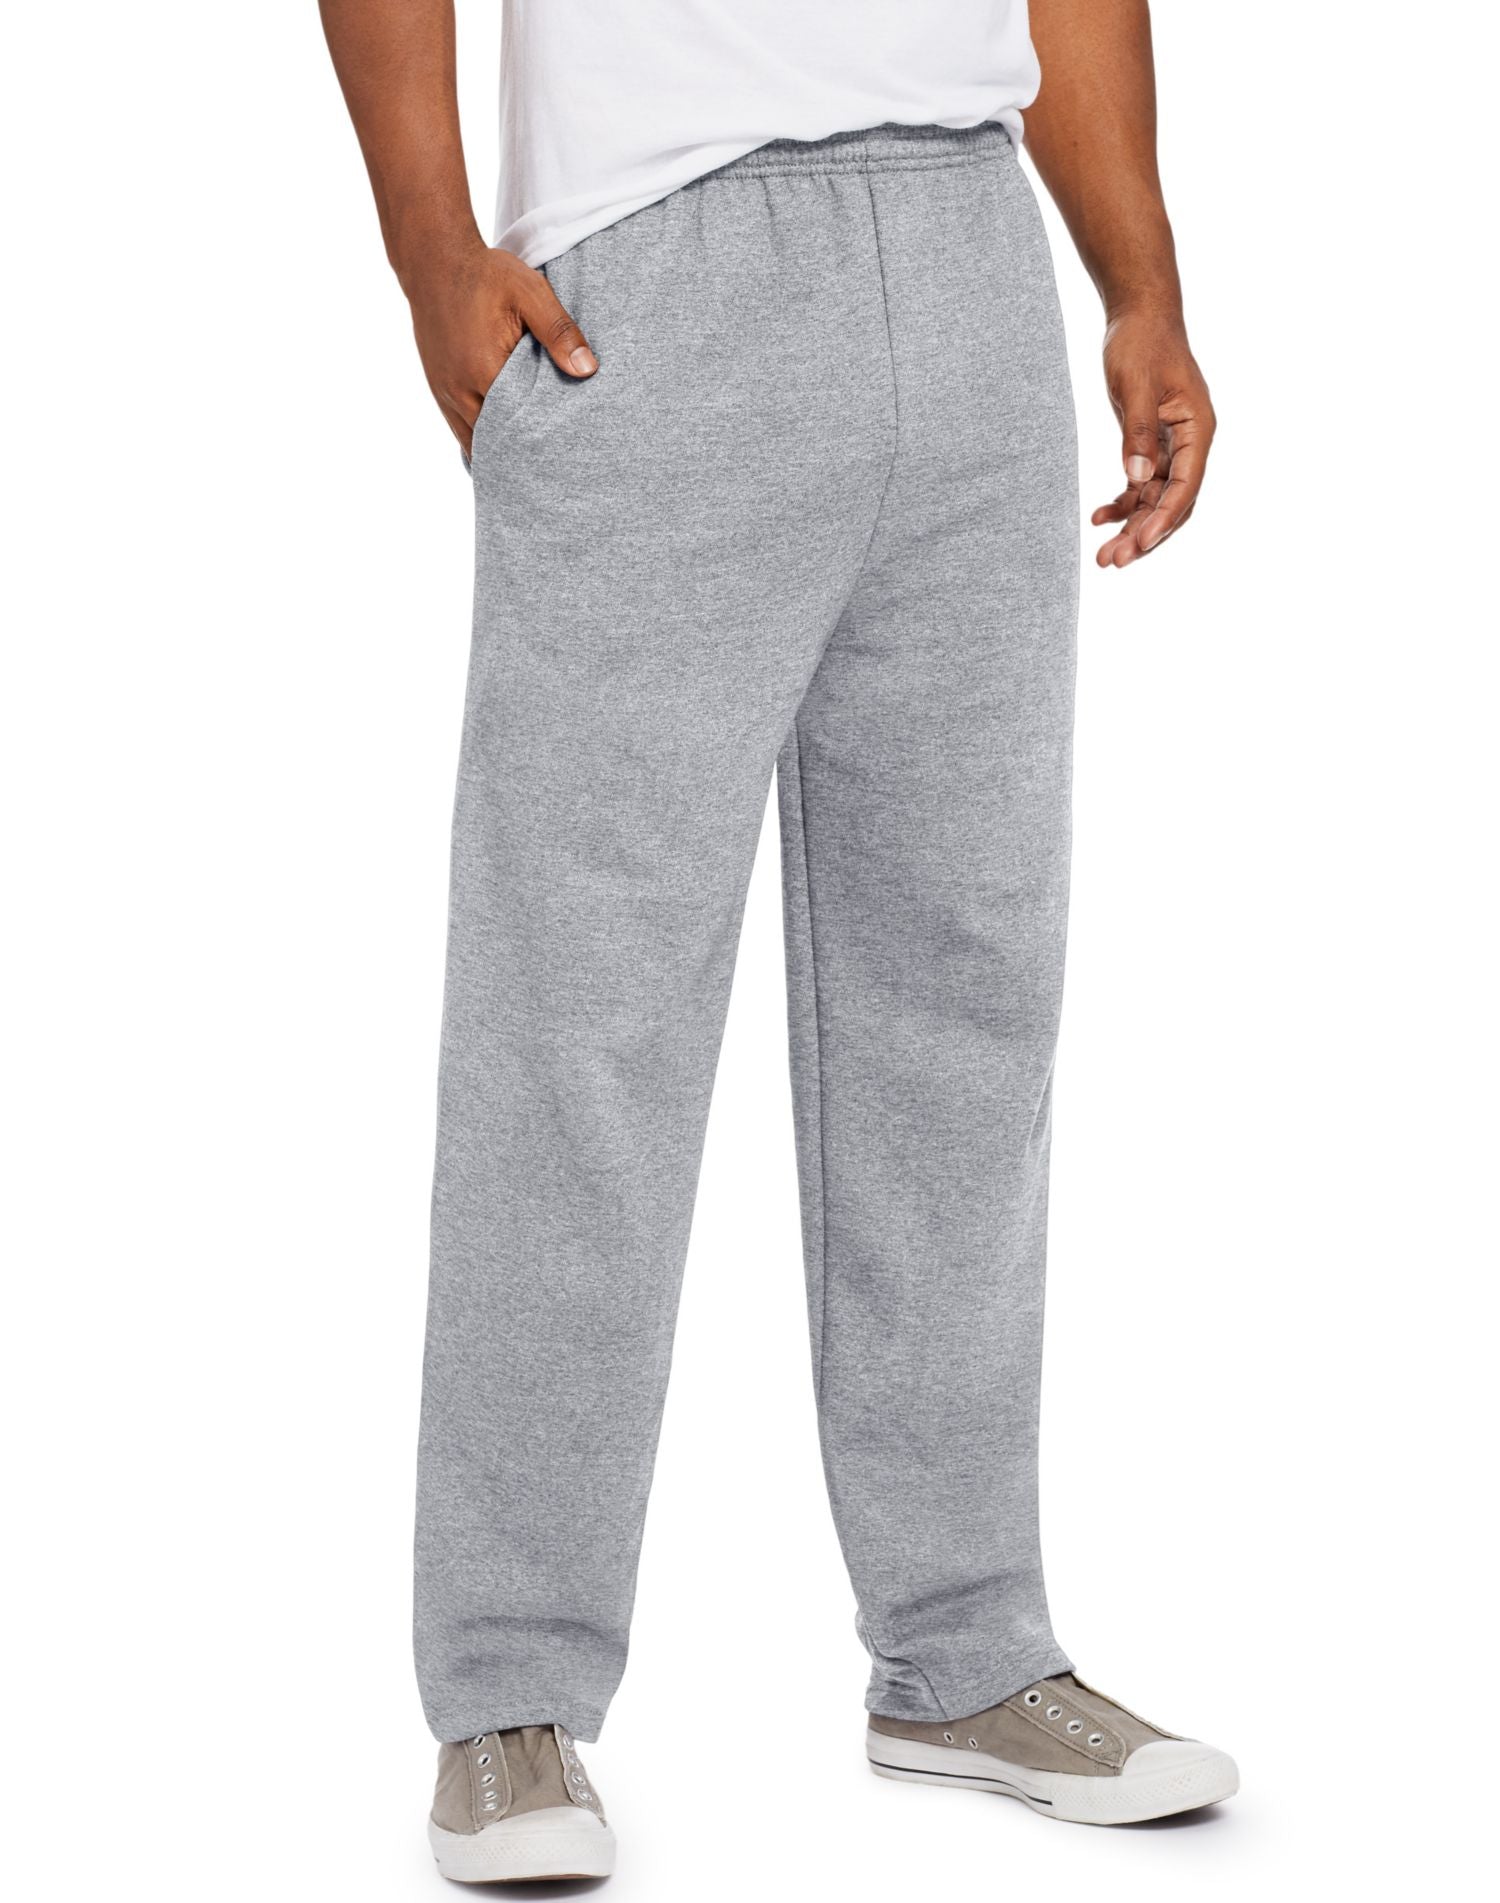 O5995 - Hanes Mens Comfort Soft Eco Smart Fleece Sweatpants